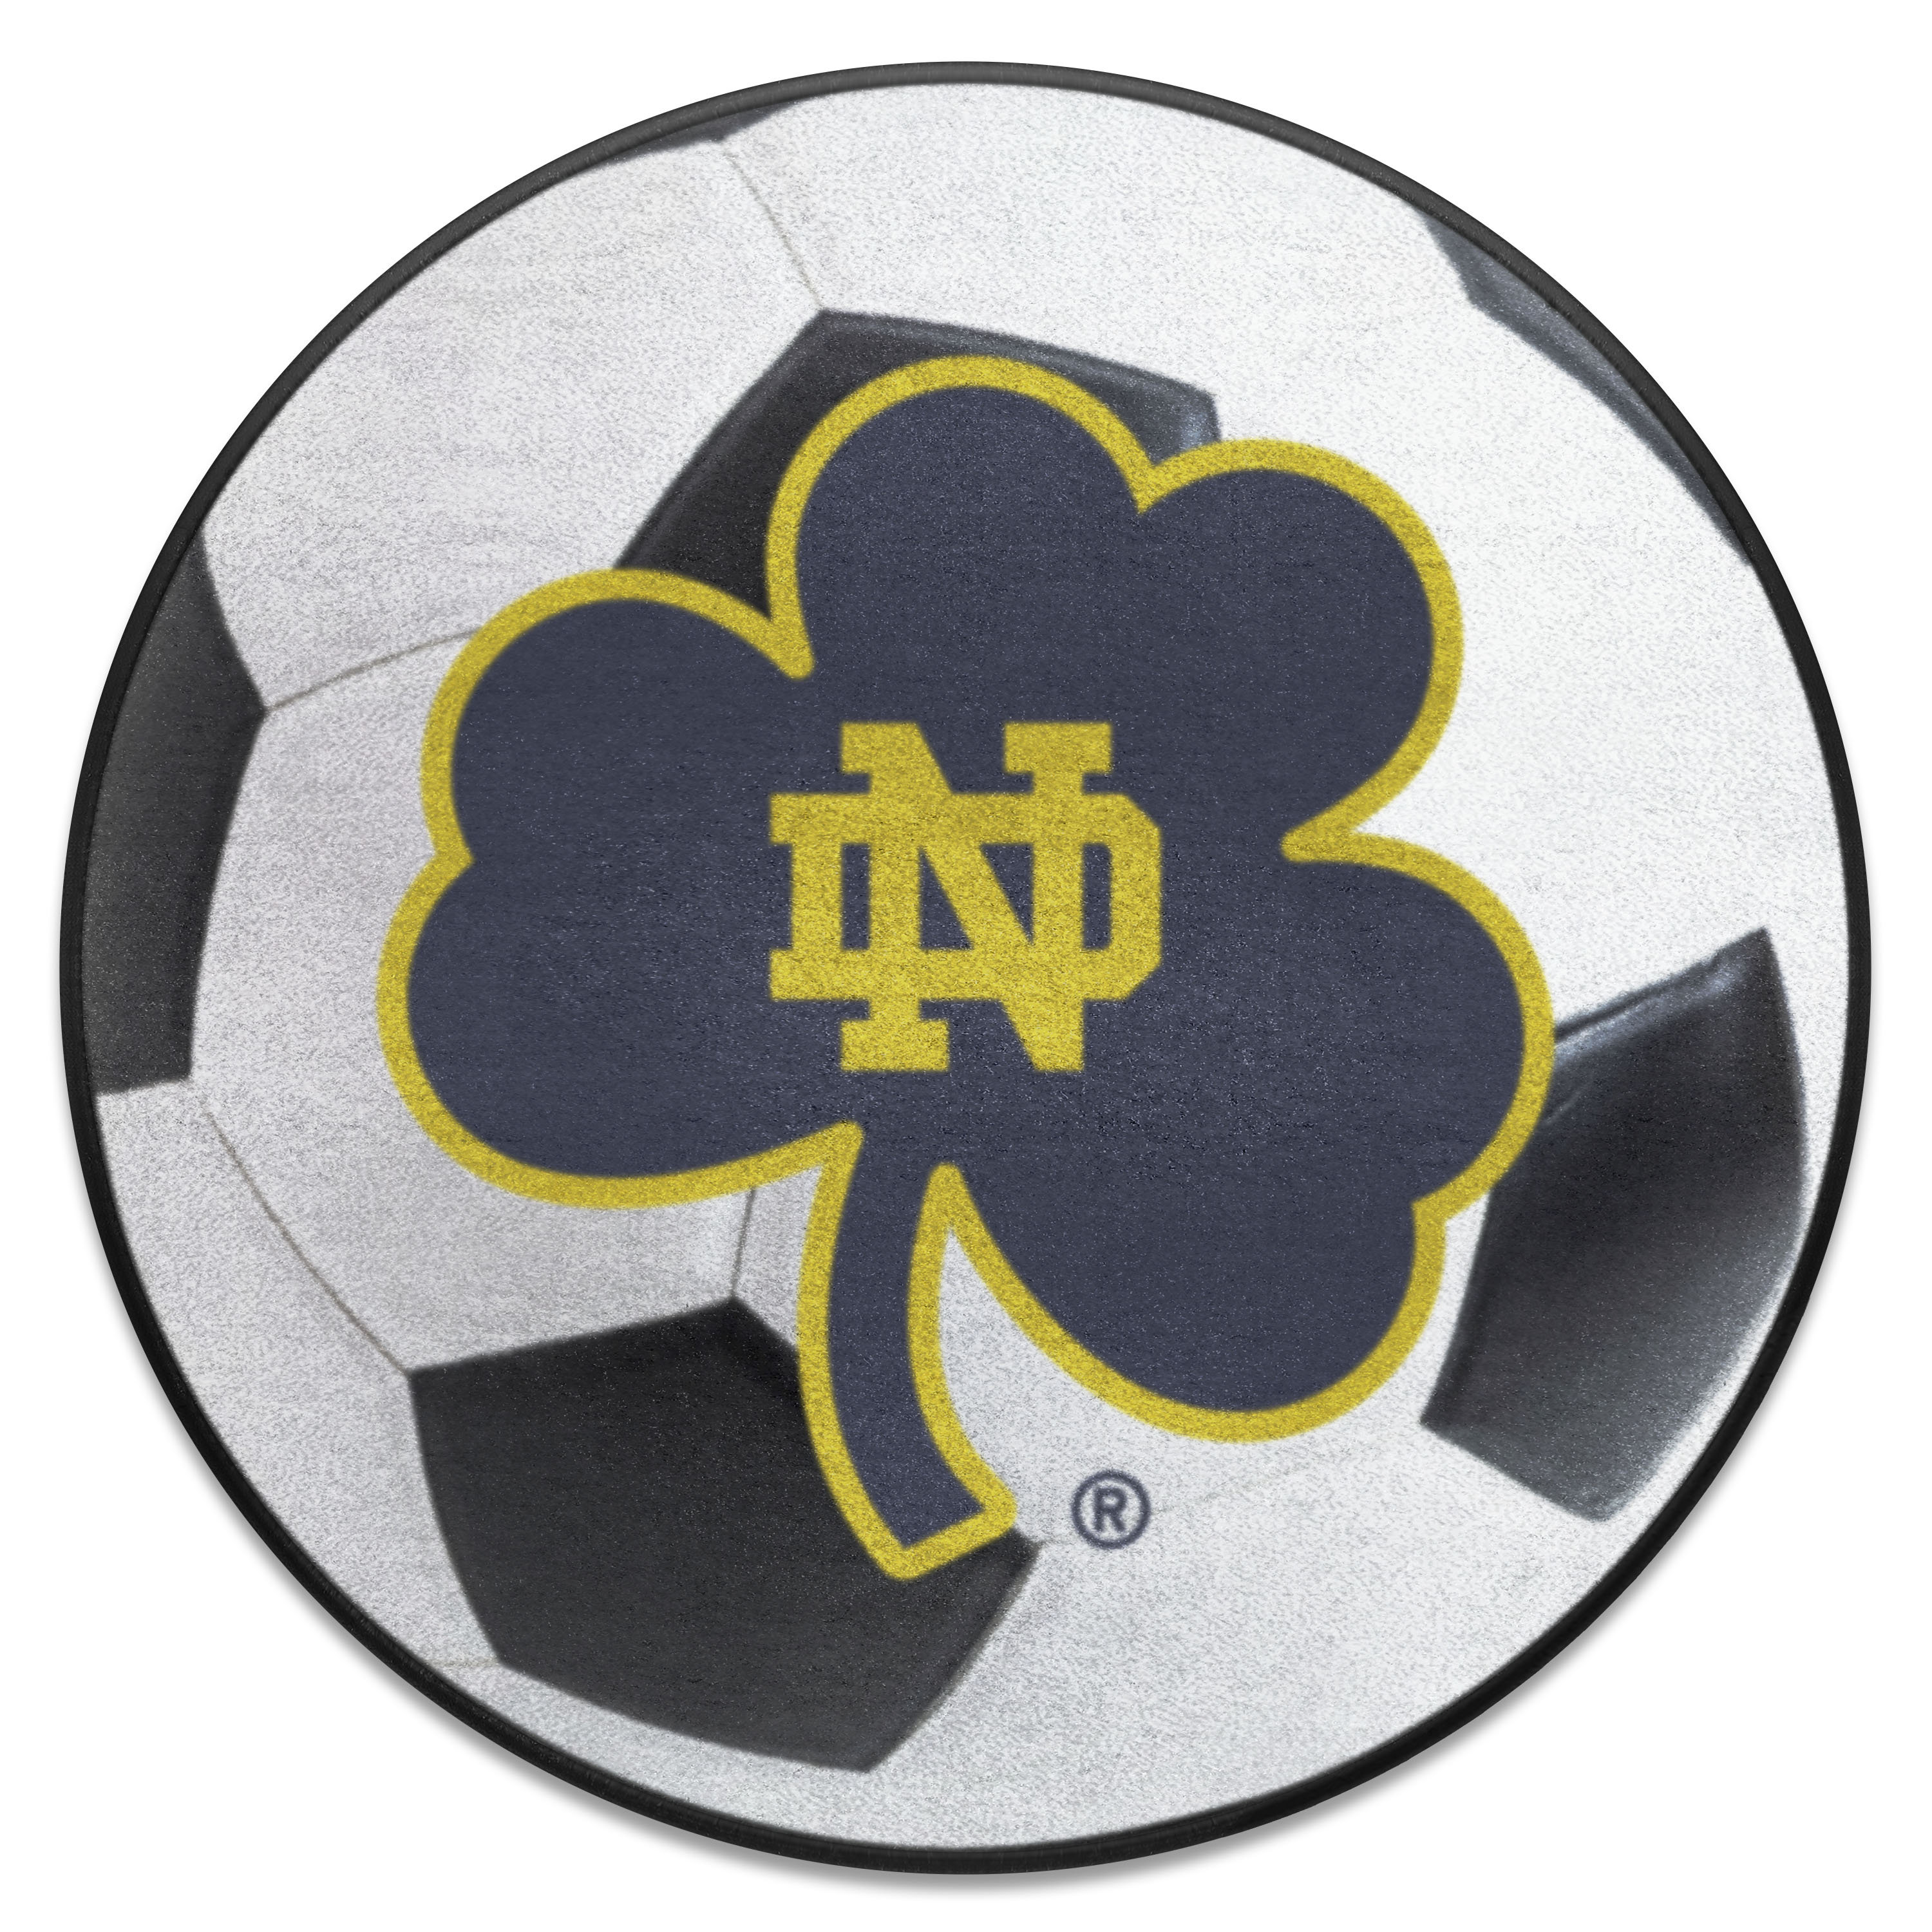 Fanmats Notre Damenotre Dame Fighting Irish Soccer Ball Rug Clover